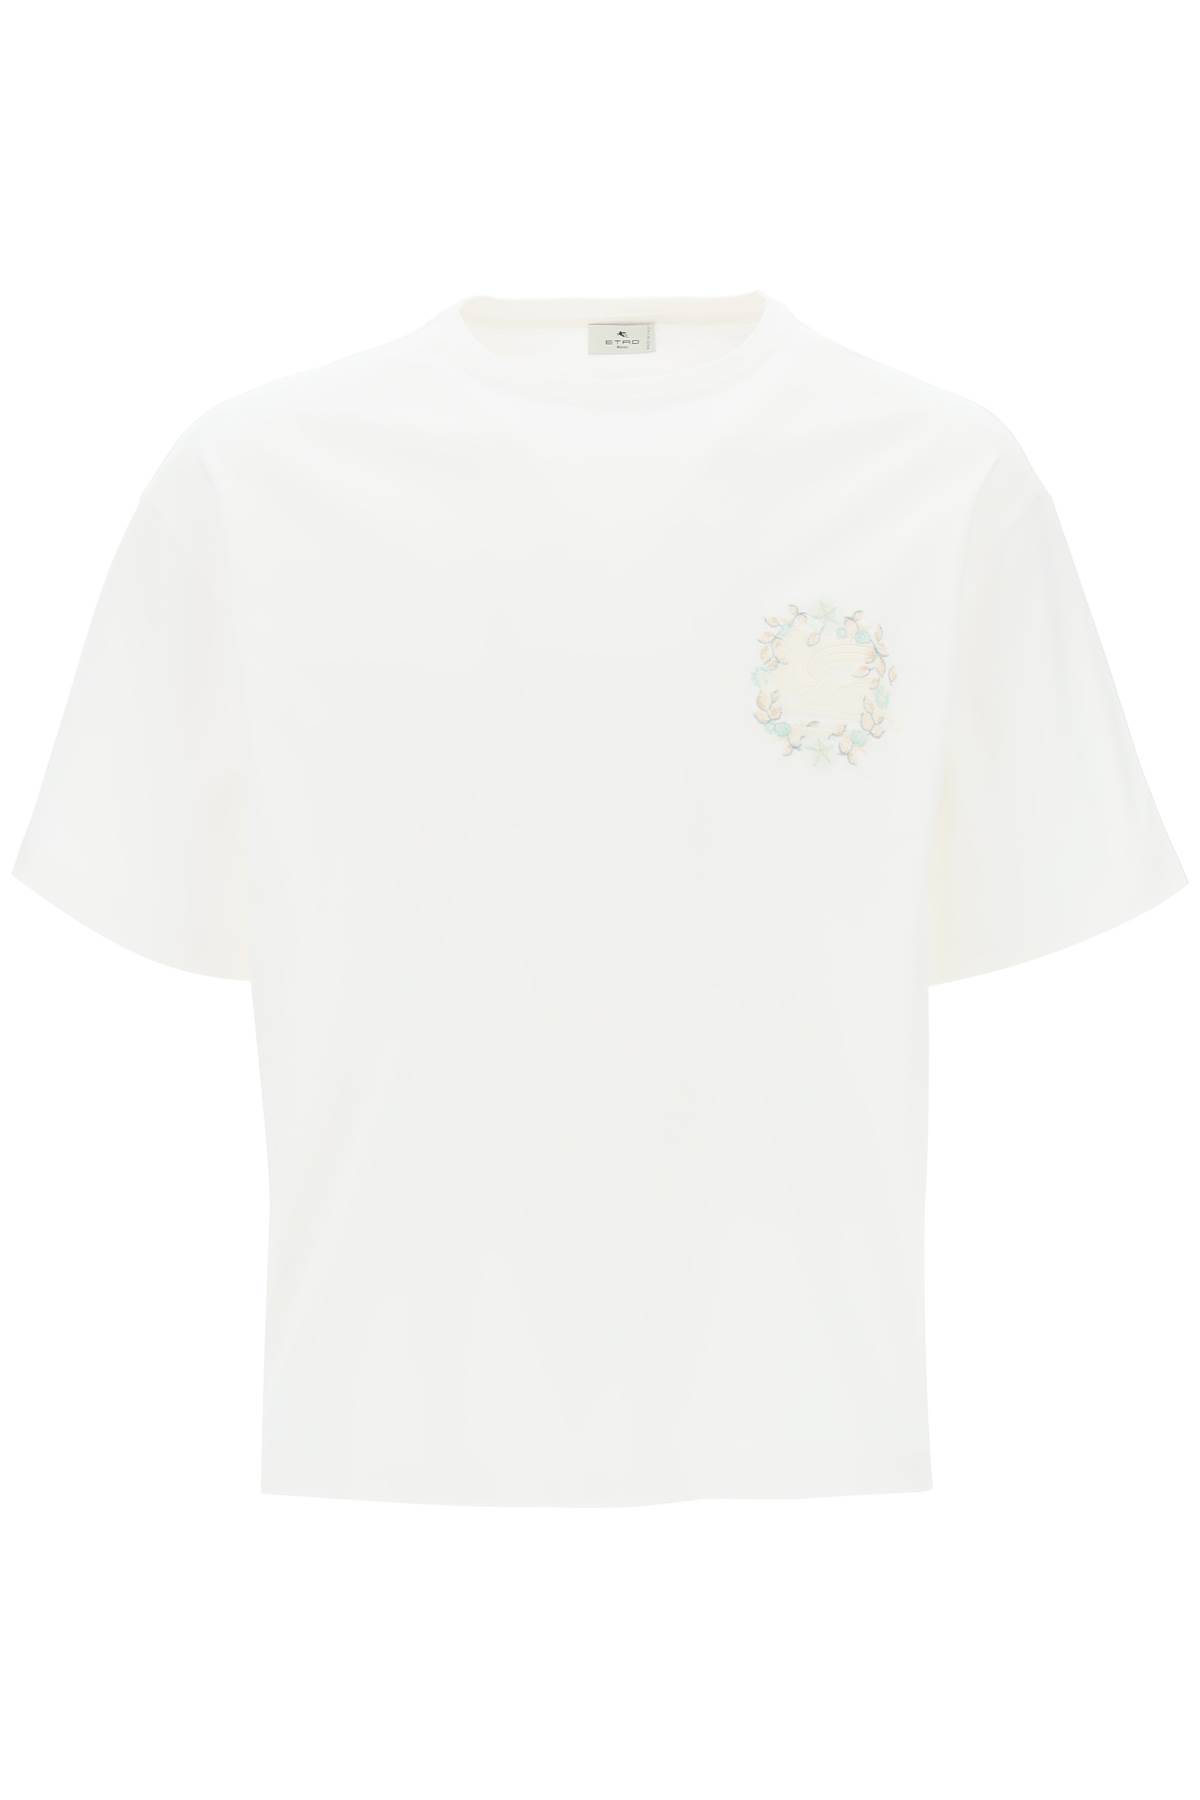 Etro ETRO floral pegasus embroidered t-shirt